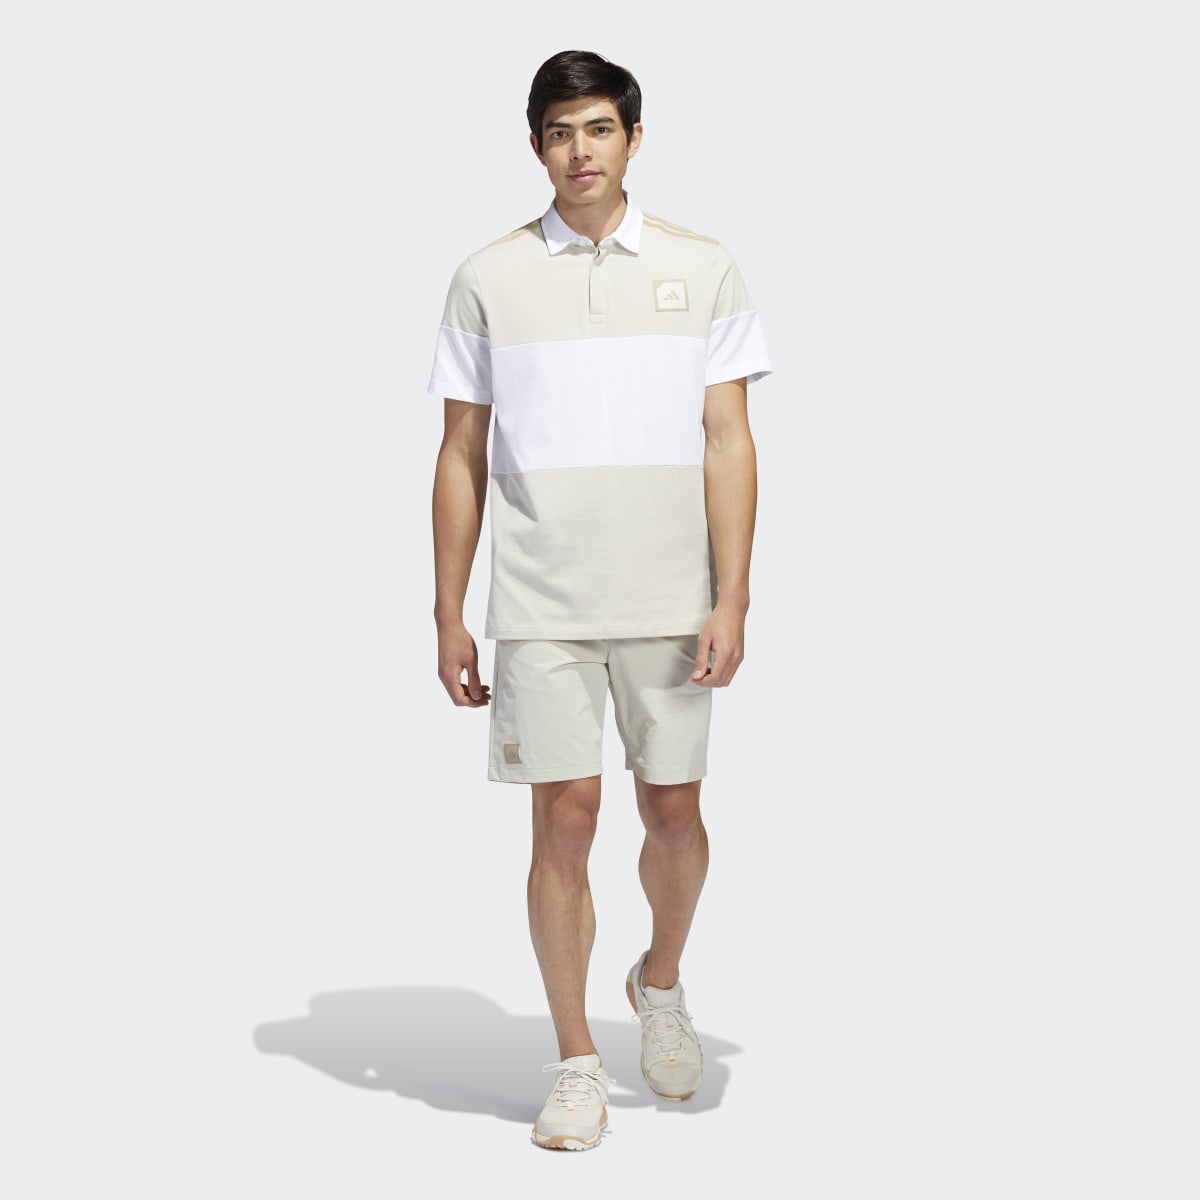 Adidas Adicross Golf Shorts. 6